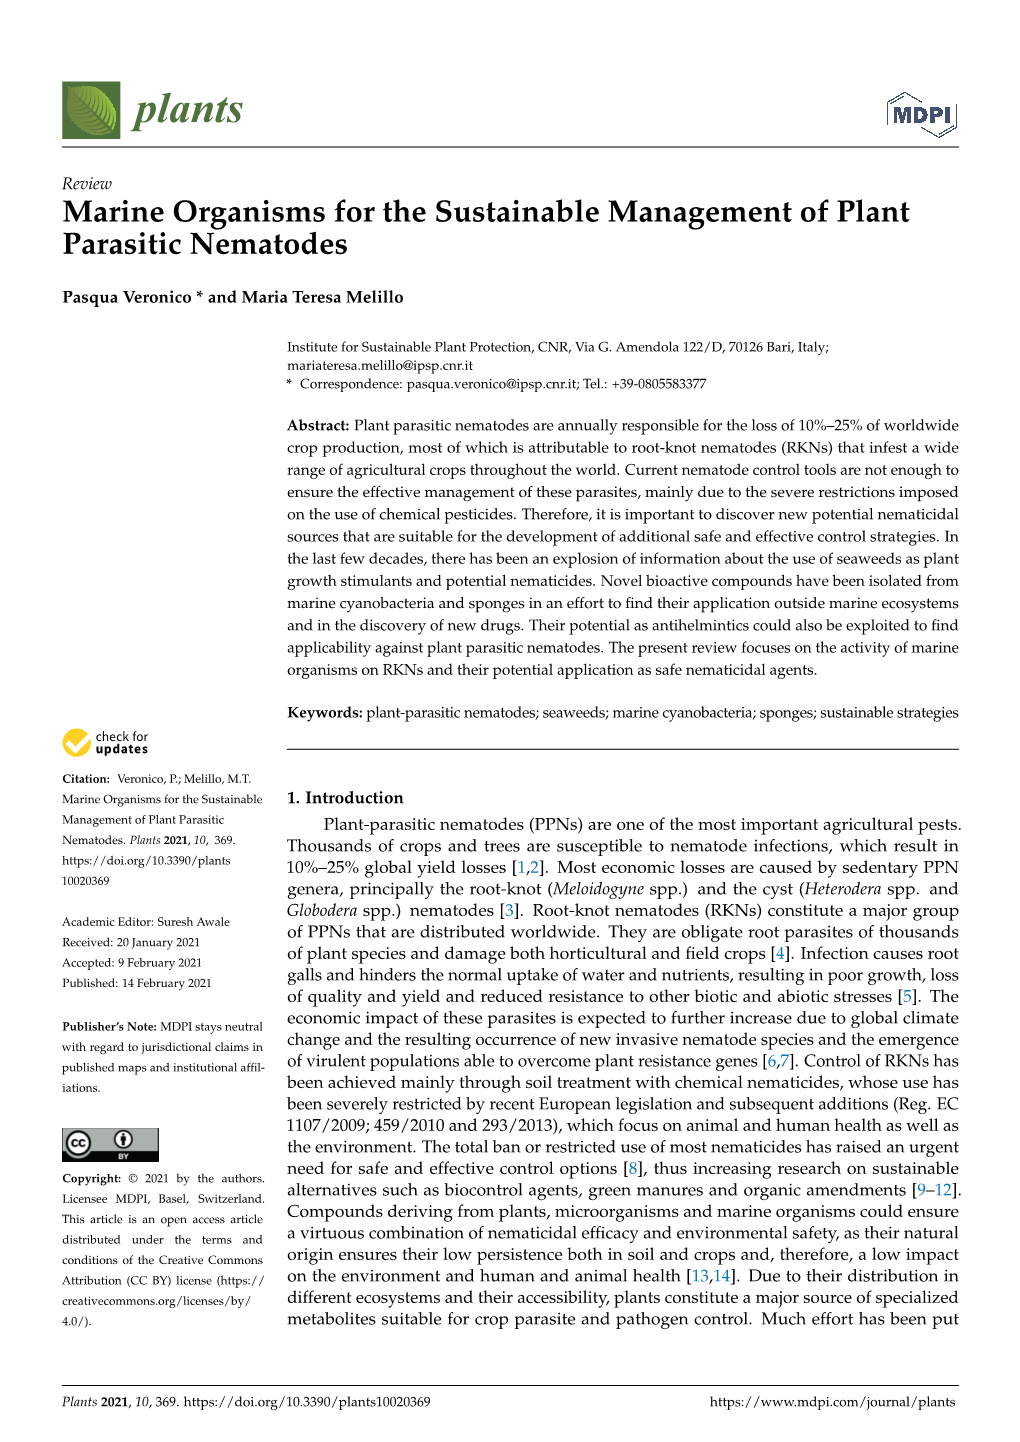 Marine Organisms for the Sustainable Management of Plant Parasitic Nematodes